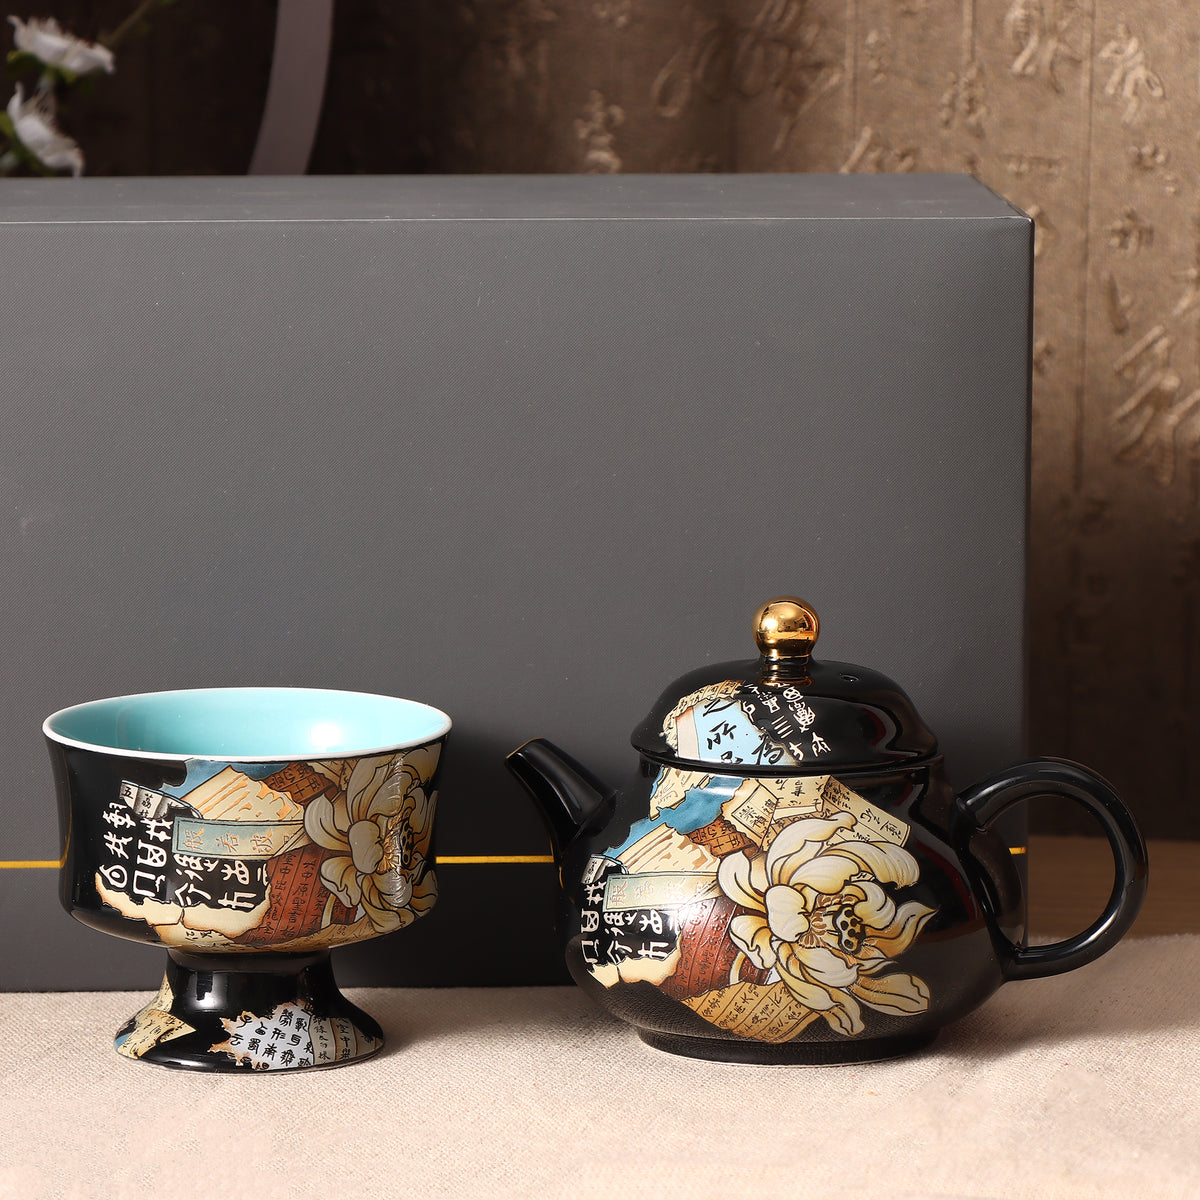 A pot of tea and a glass of wine Jianzhan teacup